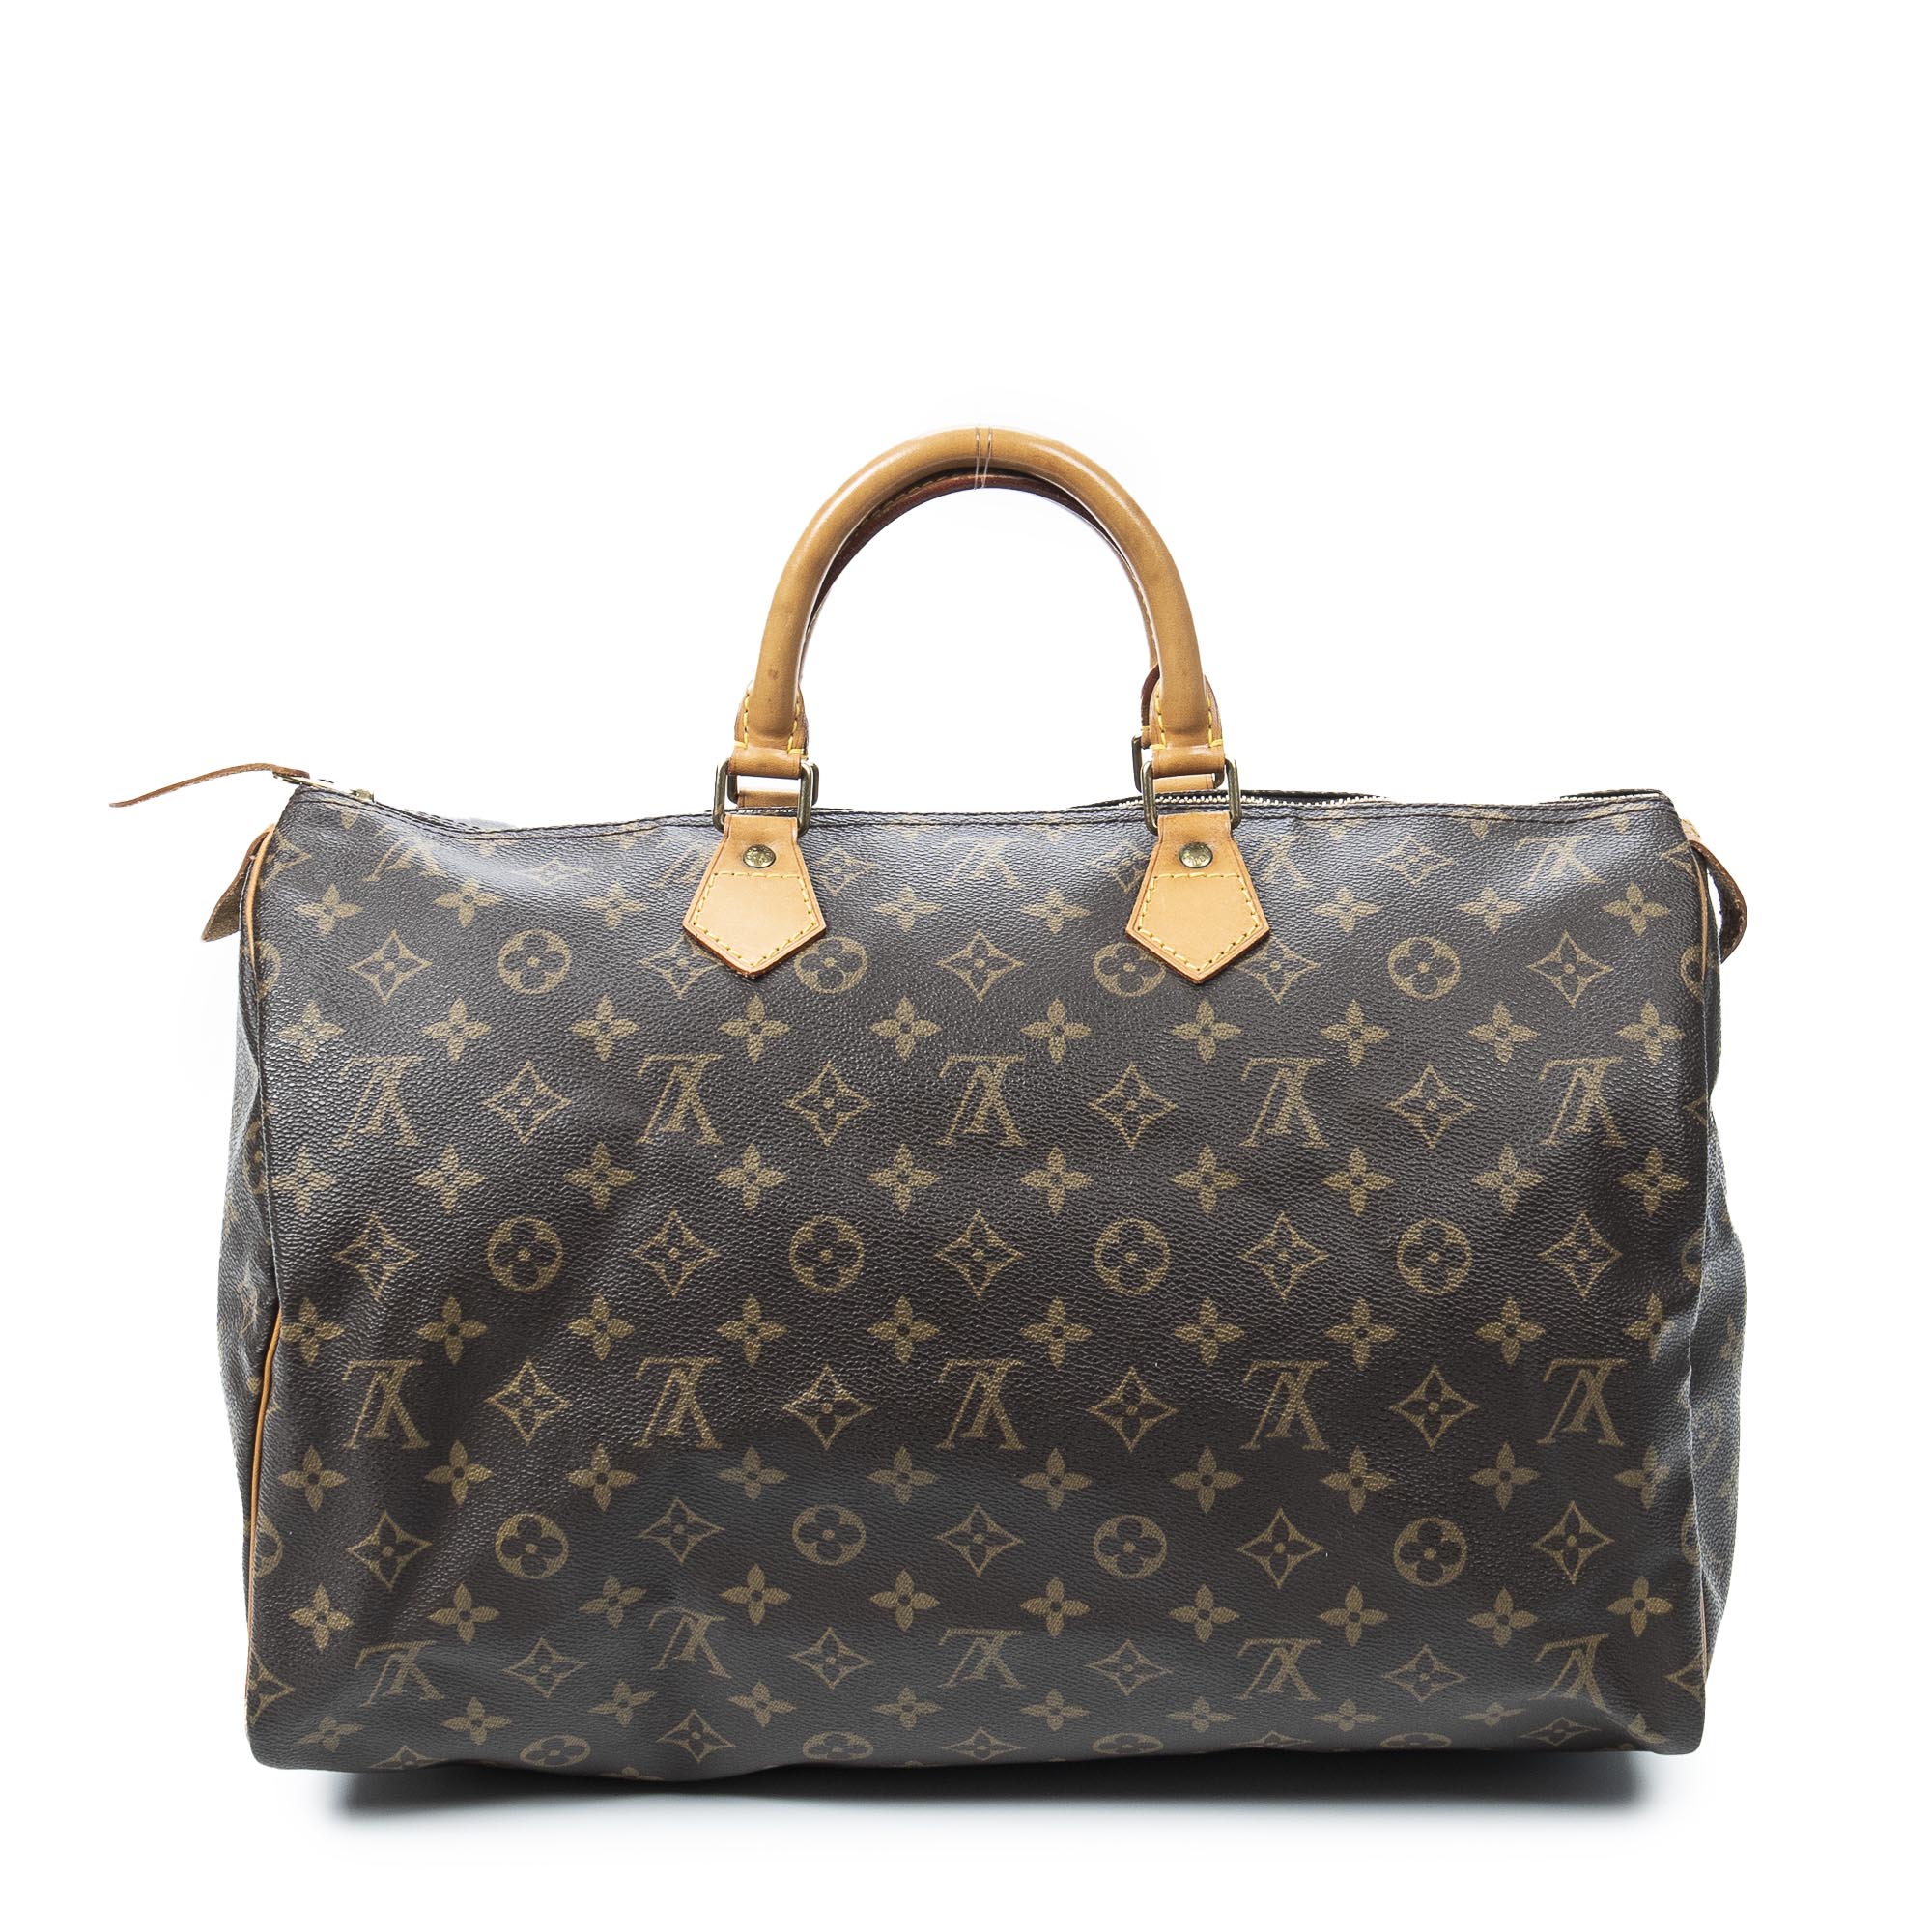 Louis Vuitton - Authenticated Speedy Bandoulière Handbag - Cloth Brown For Woman, Very Good Condition